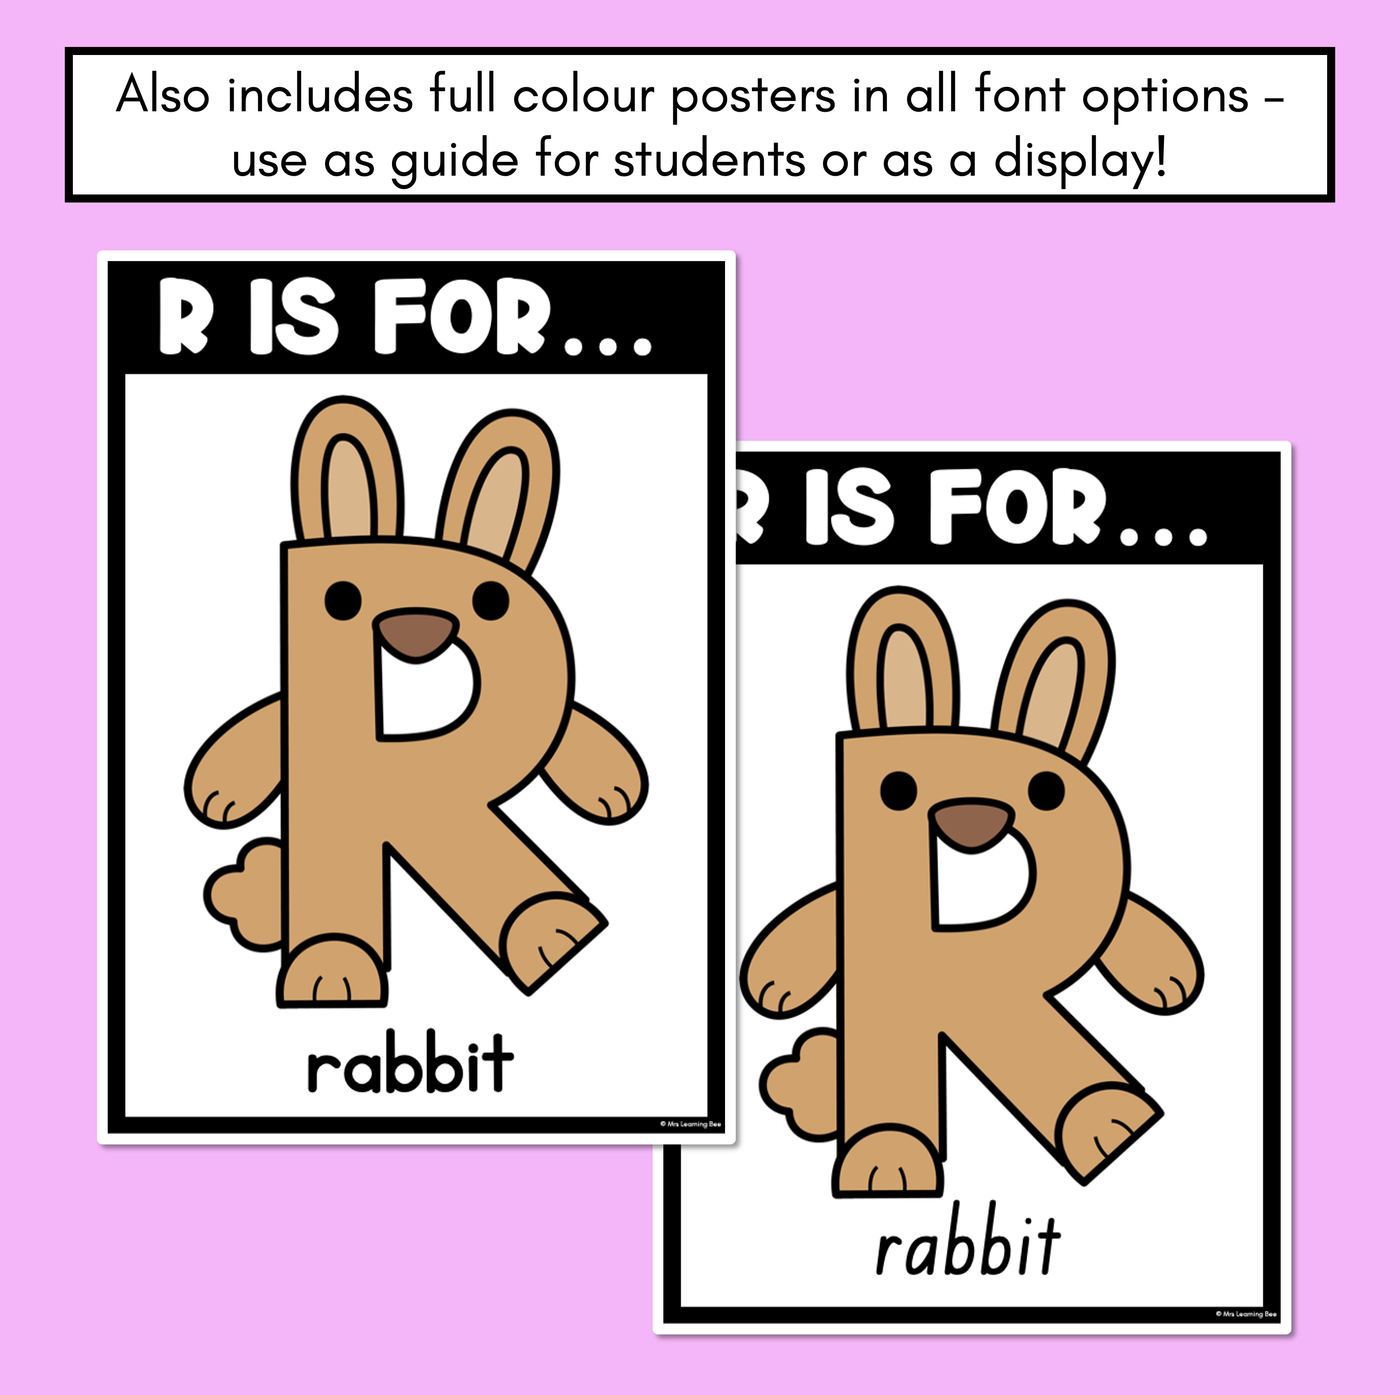 Beginning Sound Crafts - Letter R - R is for Rabbit